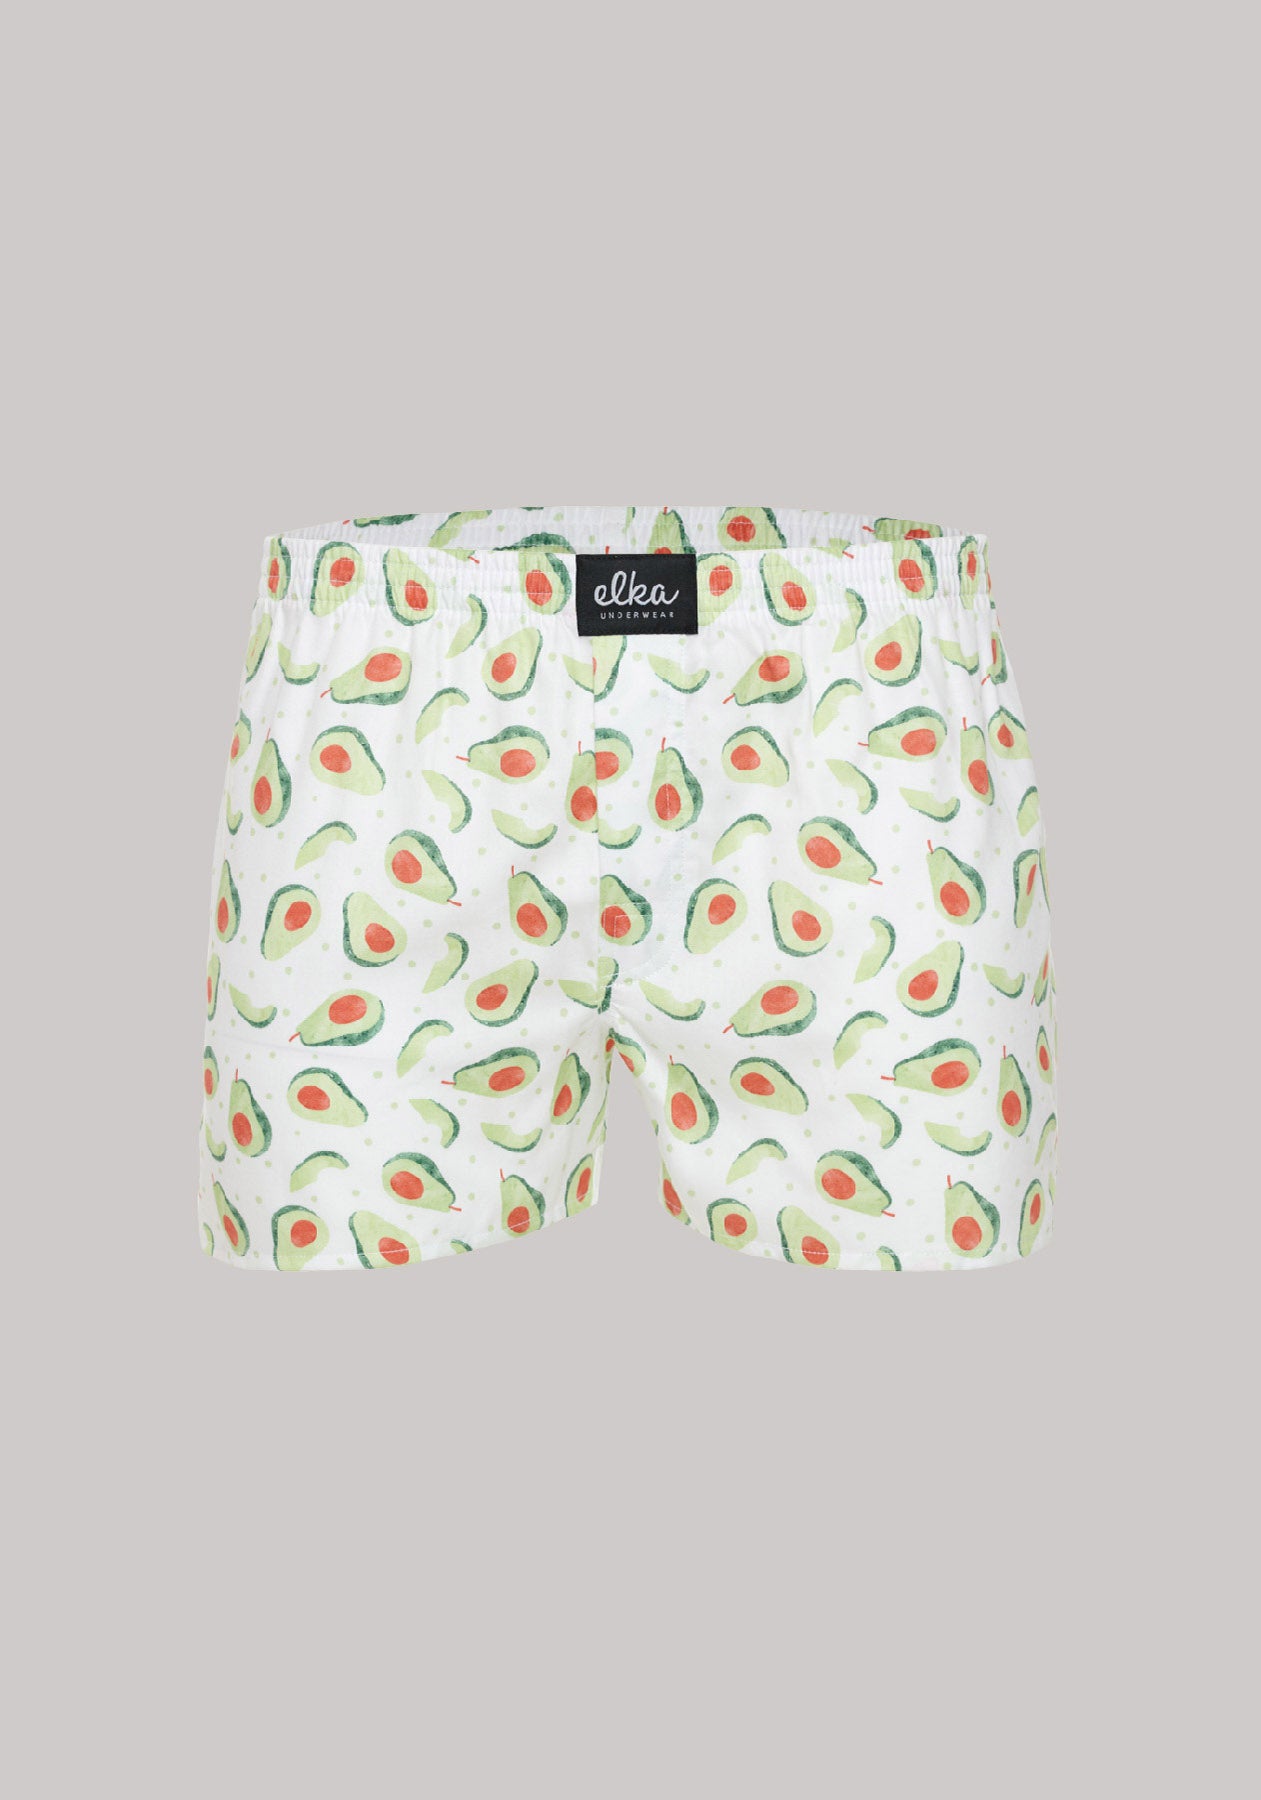 Men's shorts Avocado